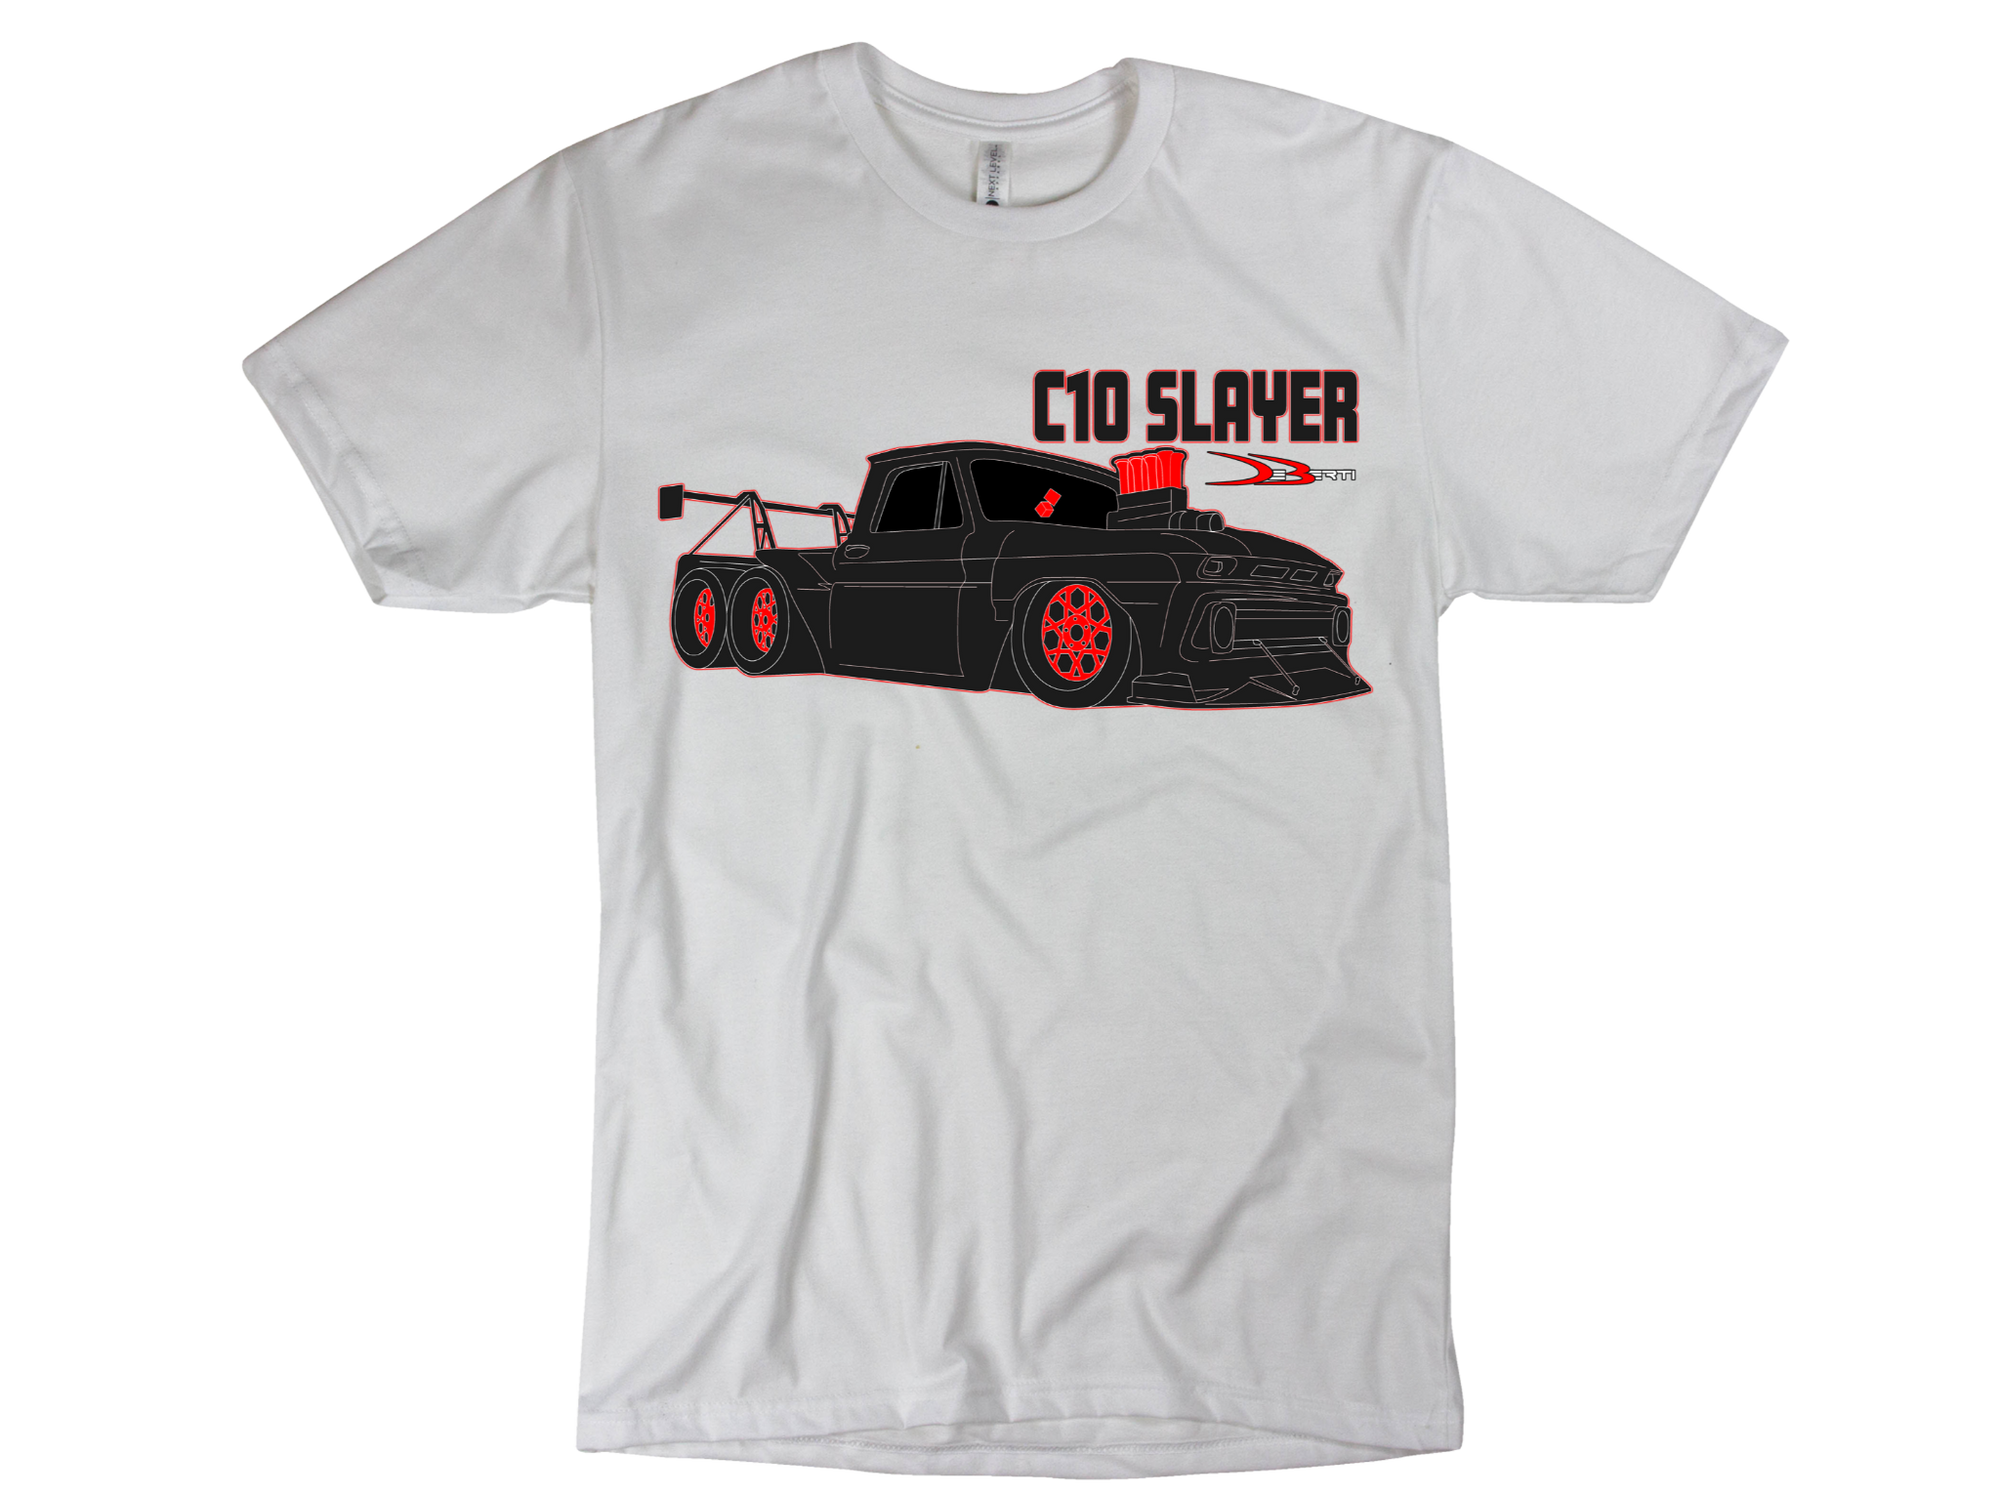 C10 Slayer T-Shirt